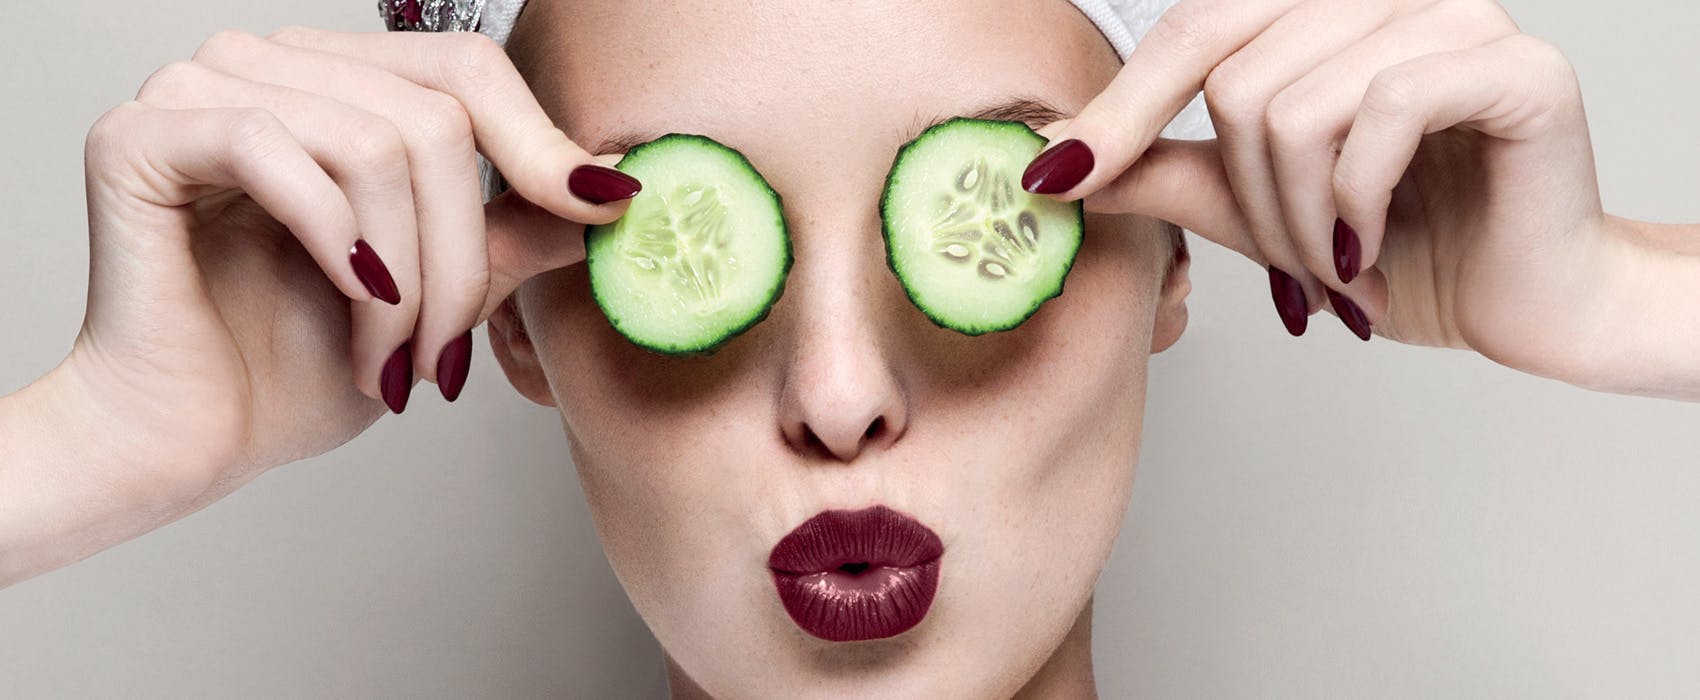 plant person human lipstick cosmetics food vegetable